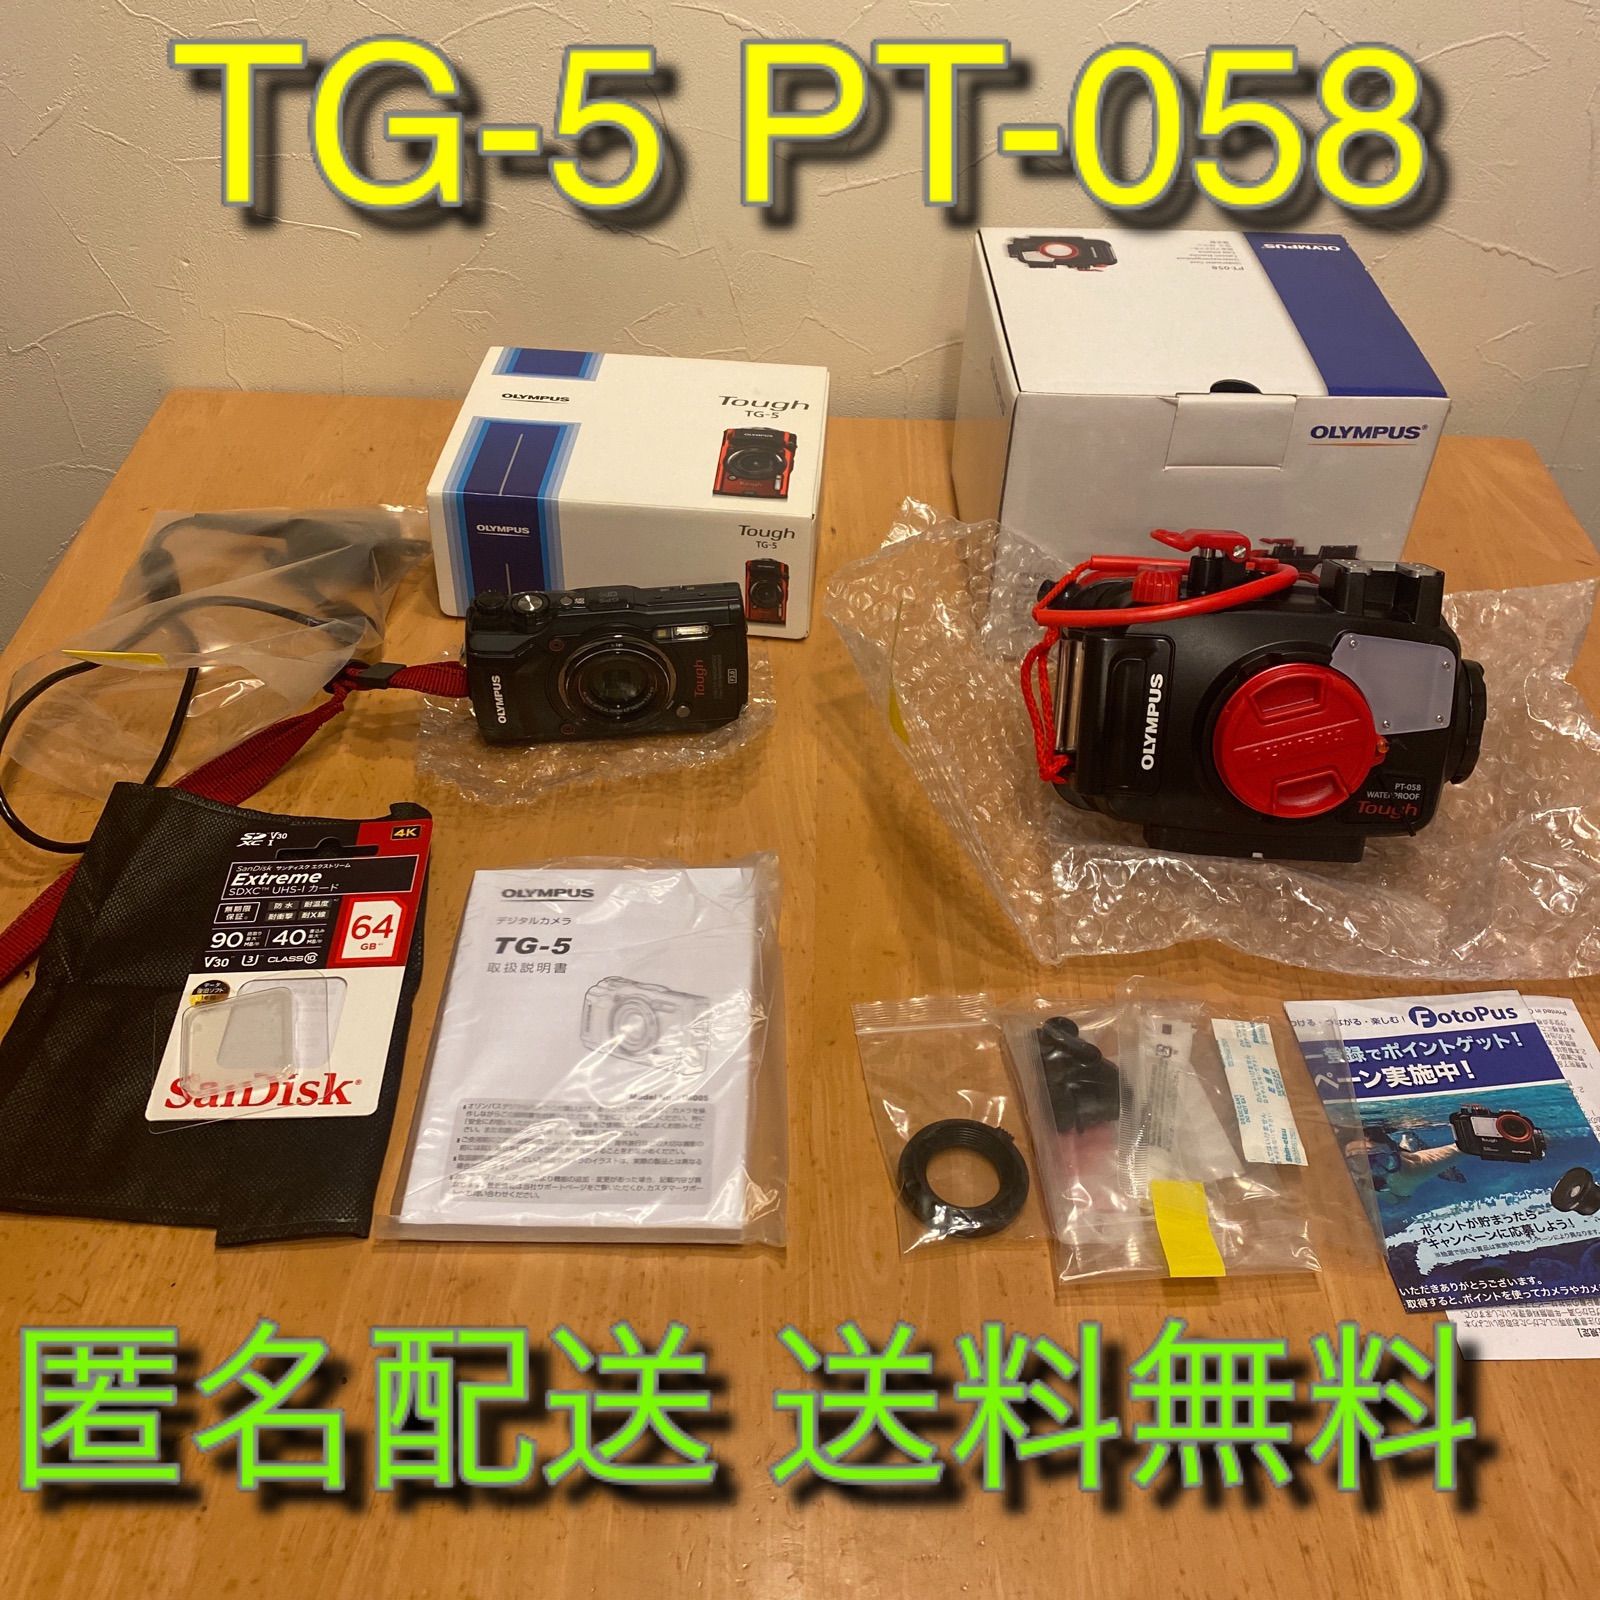 64GB カード付き 美品 OLYMPUS TG-5 カメラ ハウジング PT-058 防水